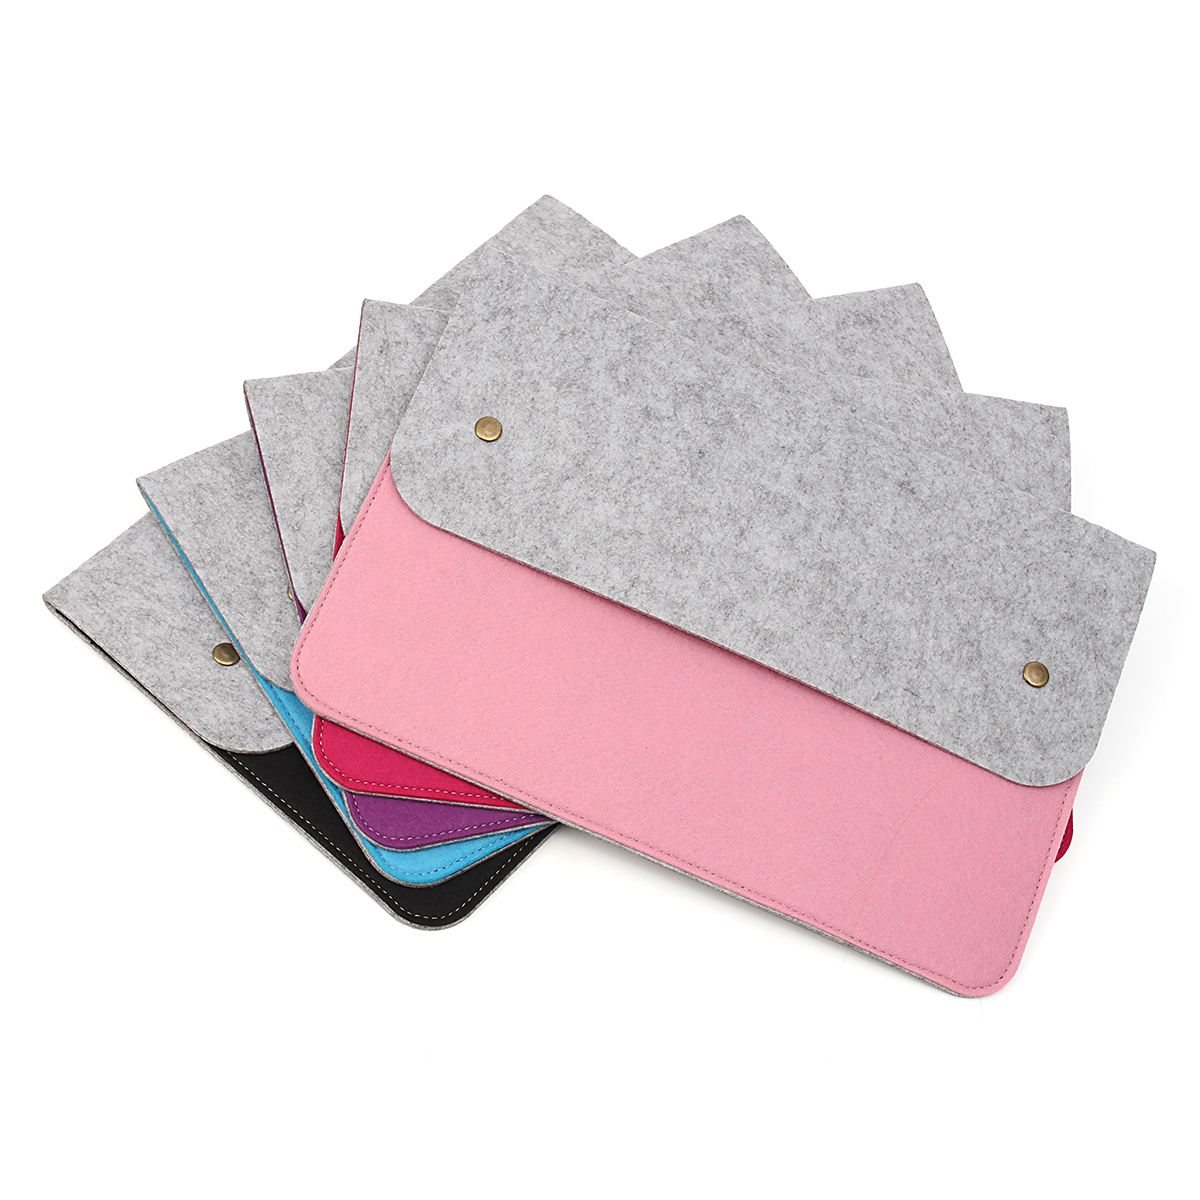 Multifunctional-Wool-Felt-Sleeve-Case-Bag-For-Apple-Macbook-12-Inch-1121082